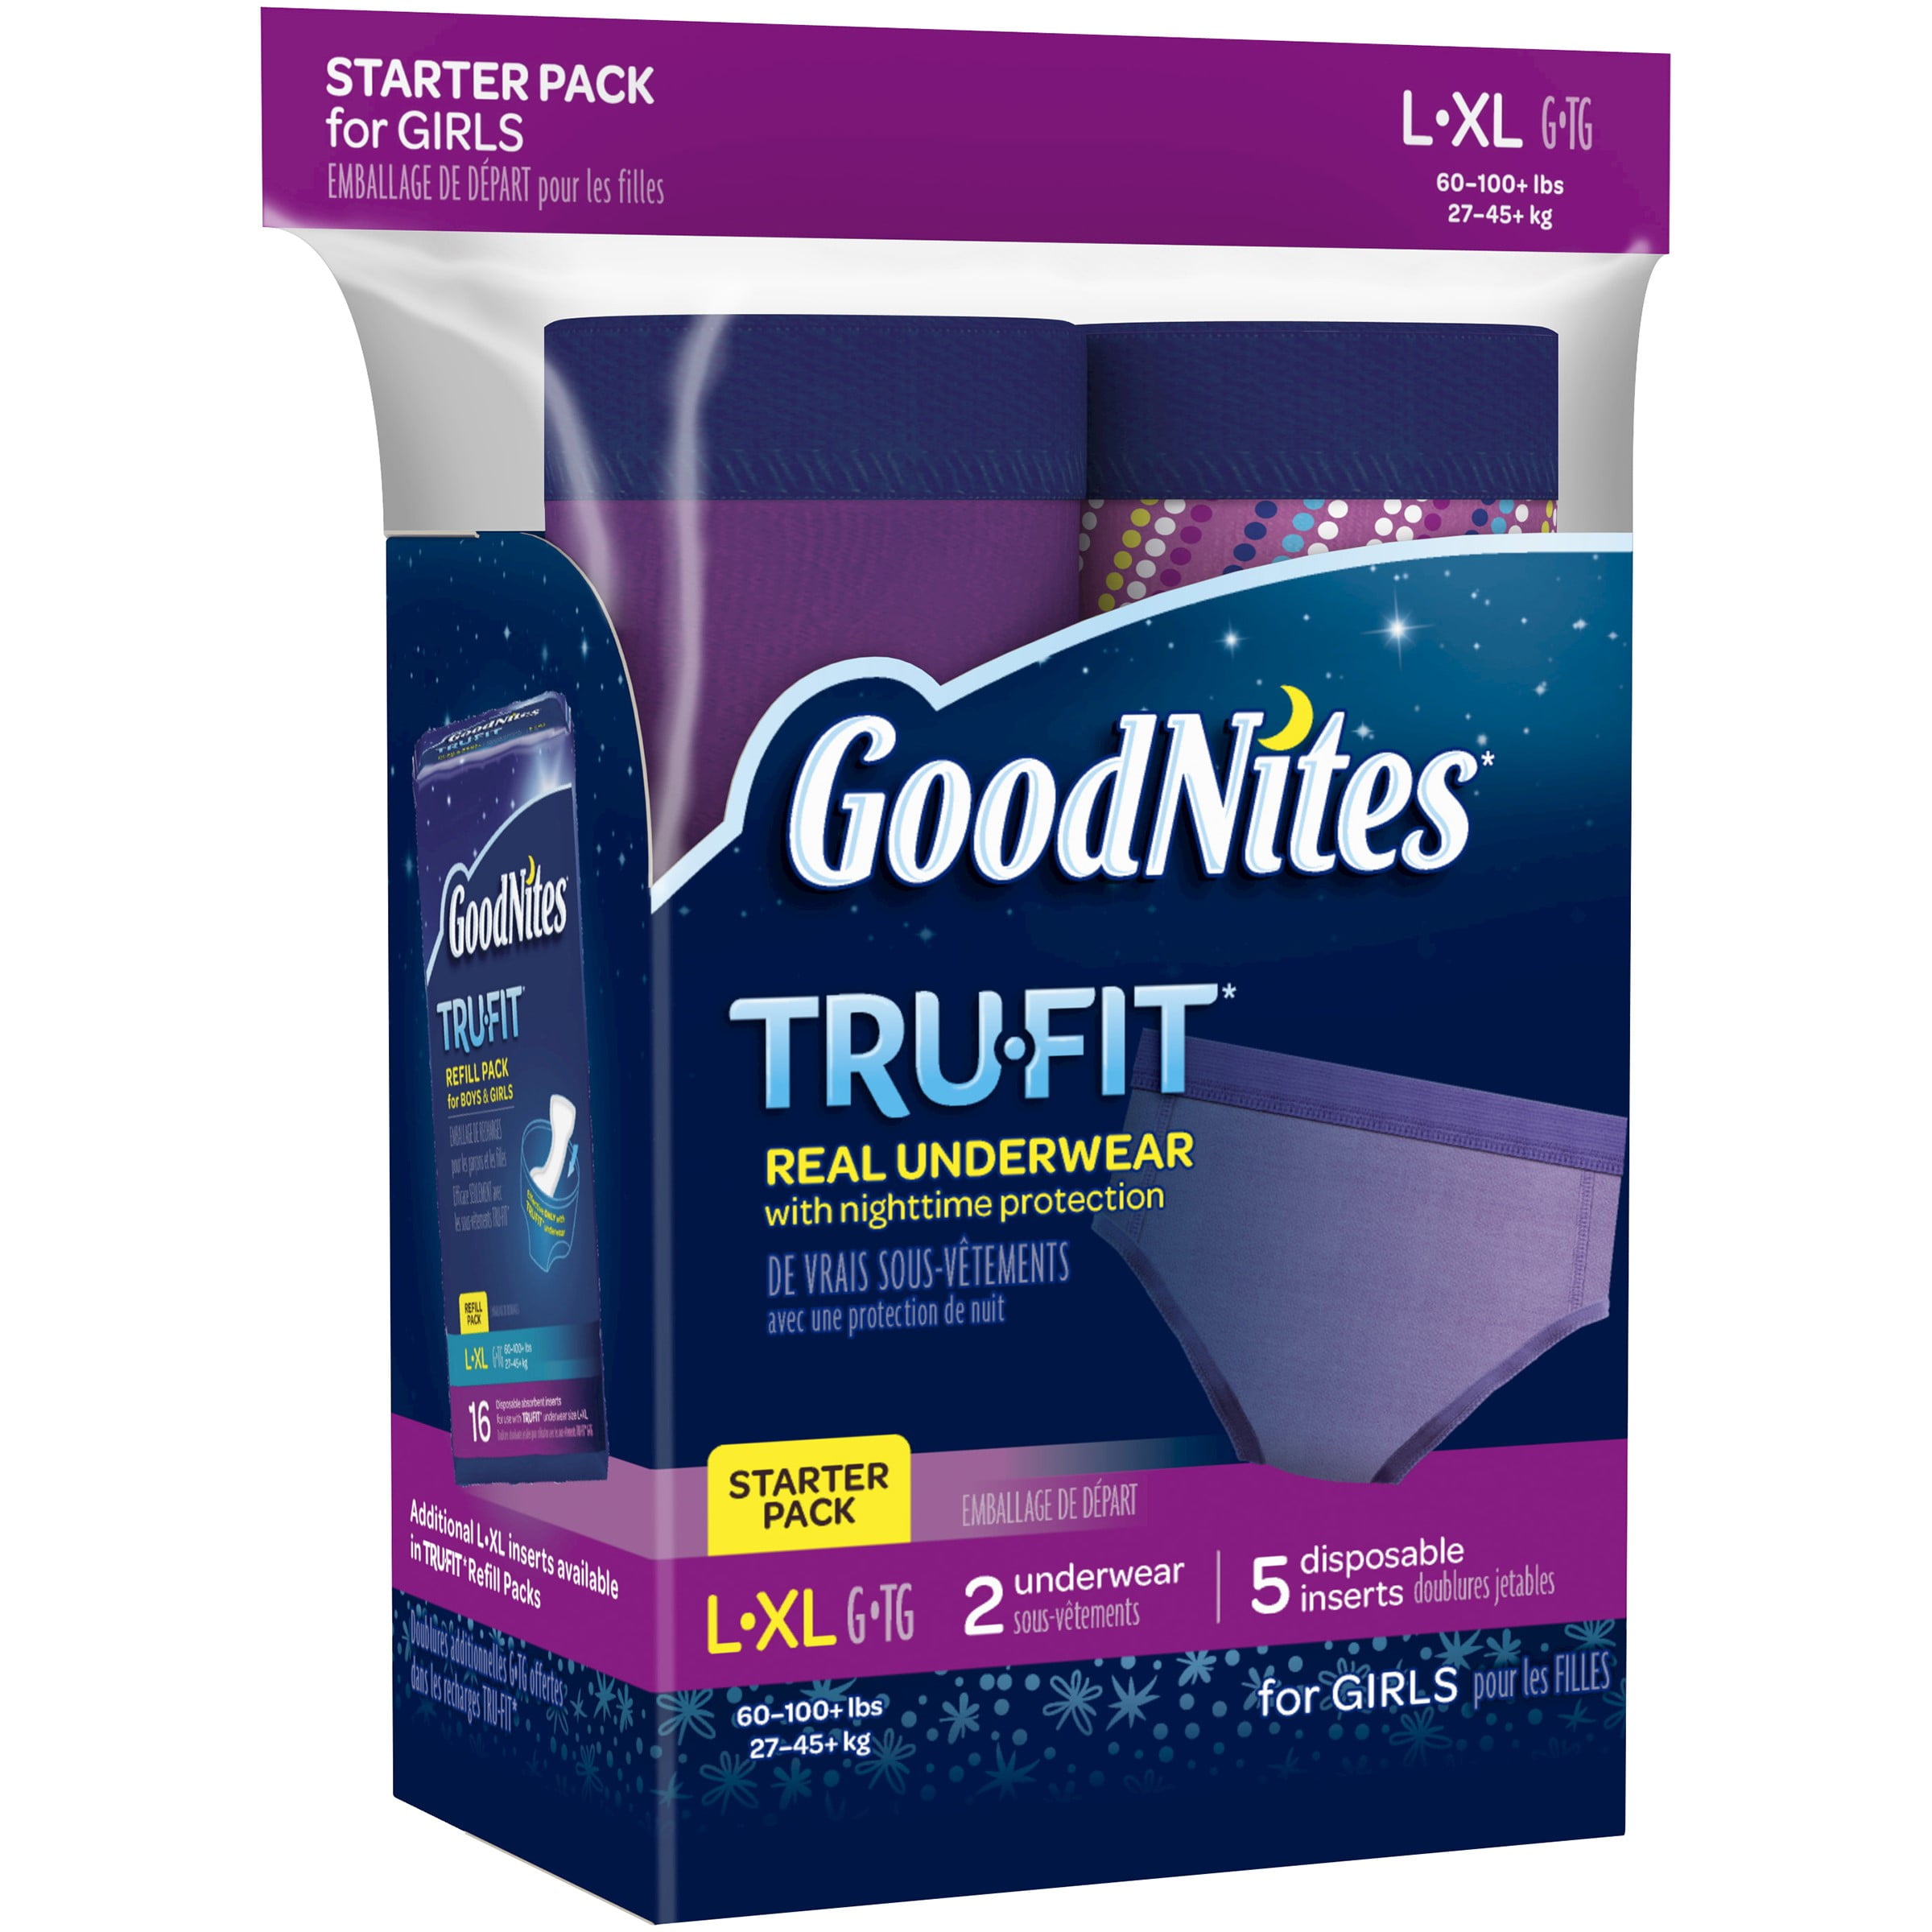 GoodNites TruFit Real Underwear Starter Pack for Girls - L/XL, 1.0